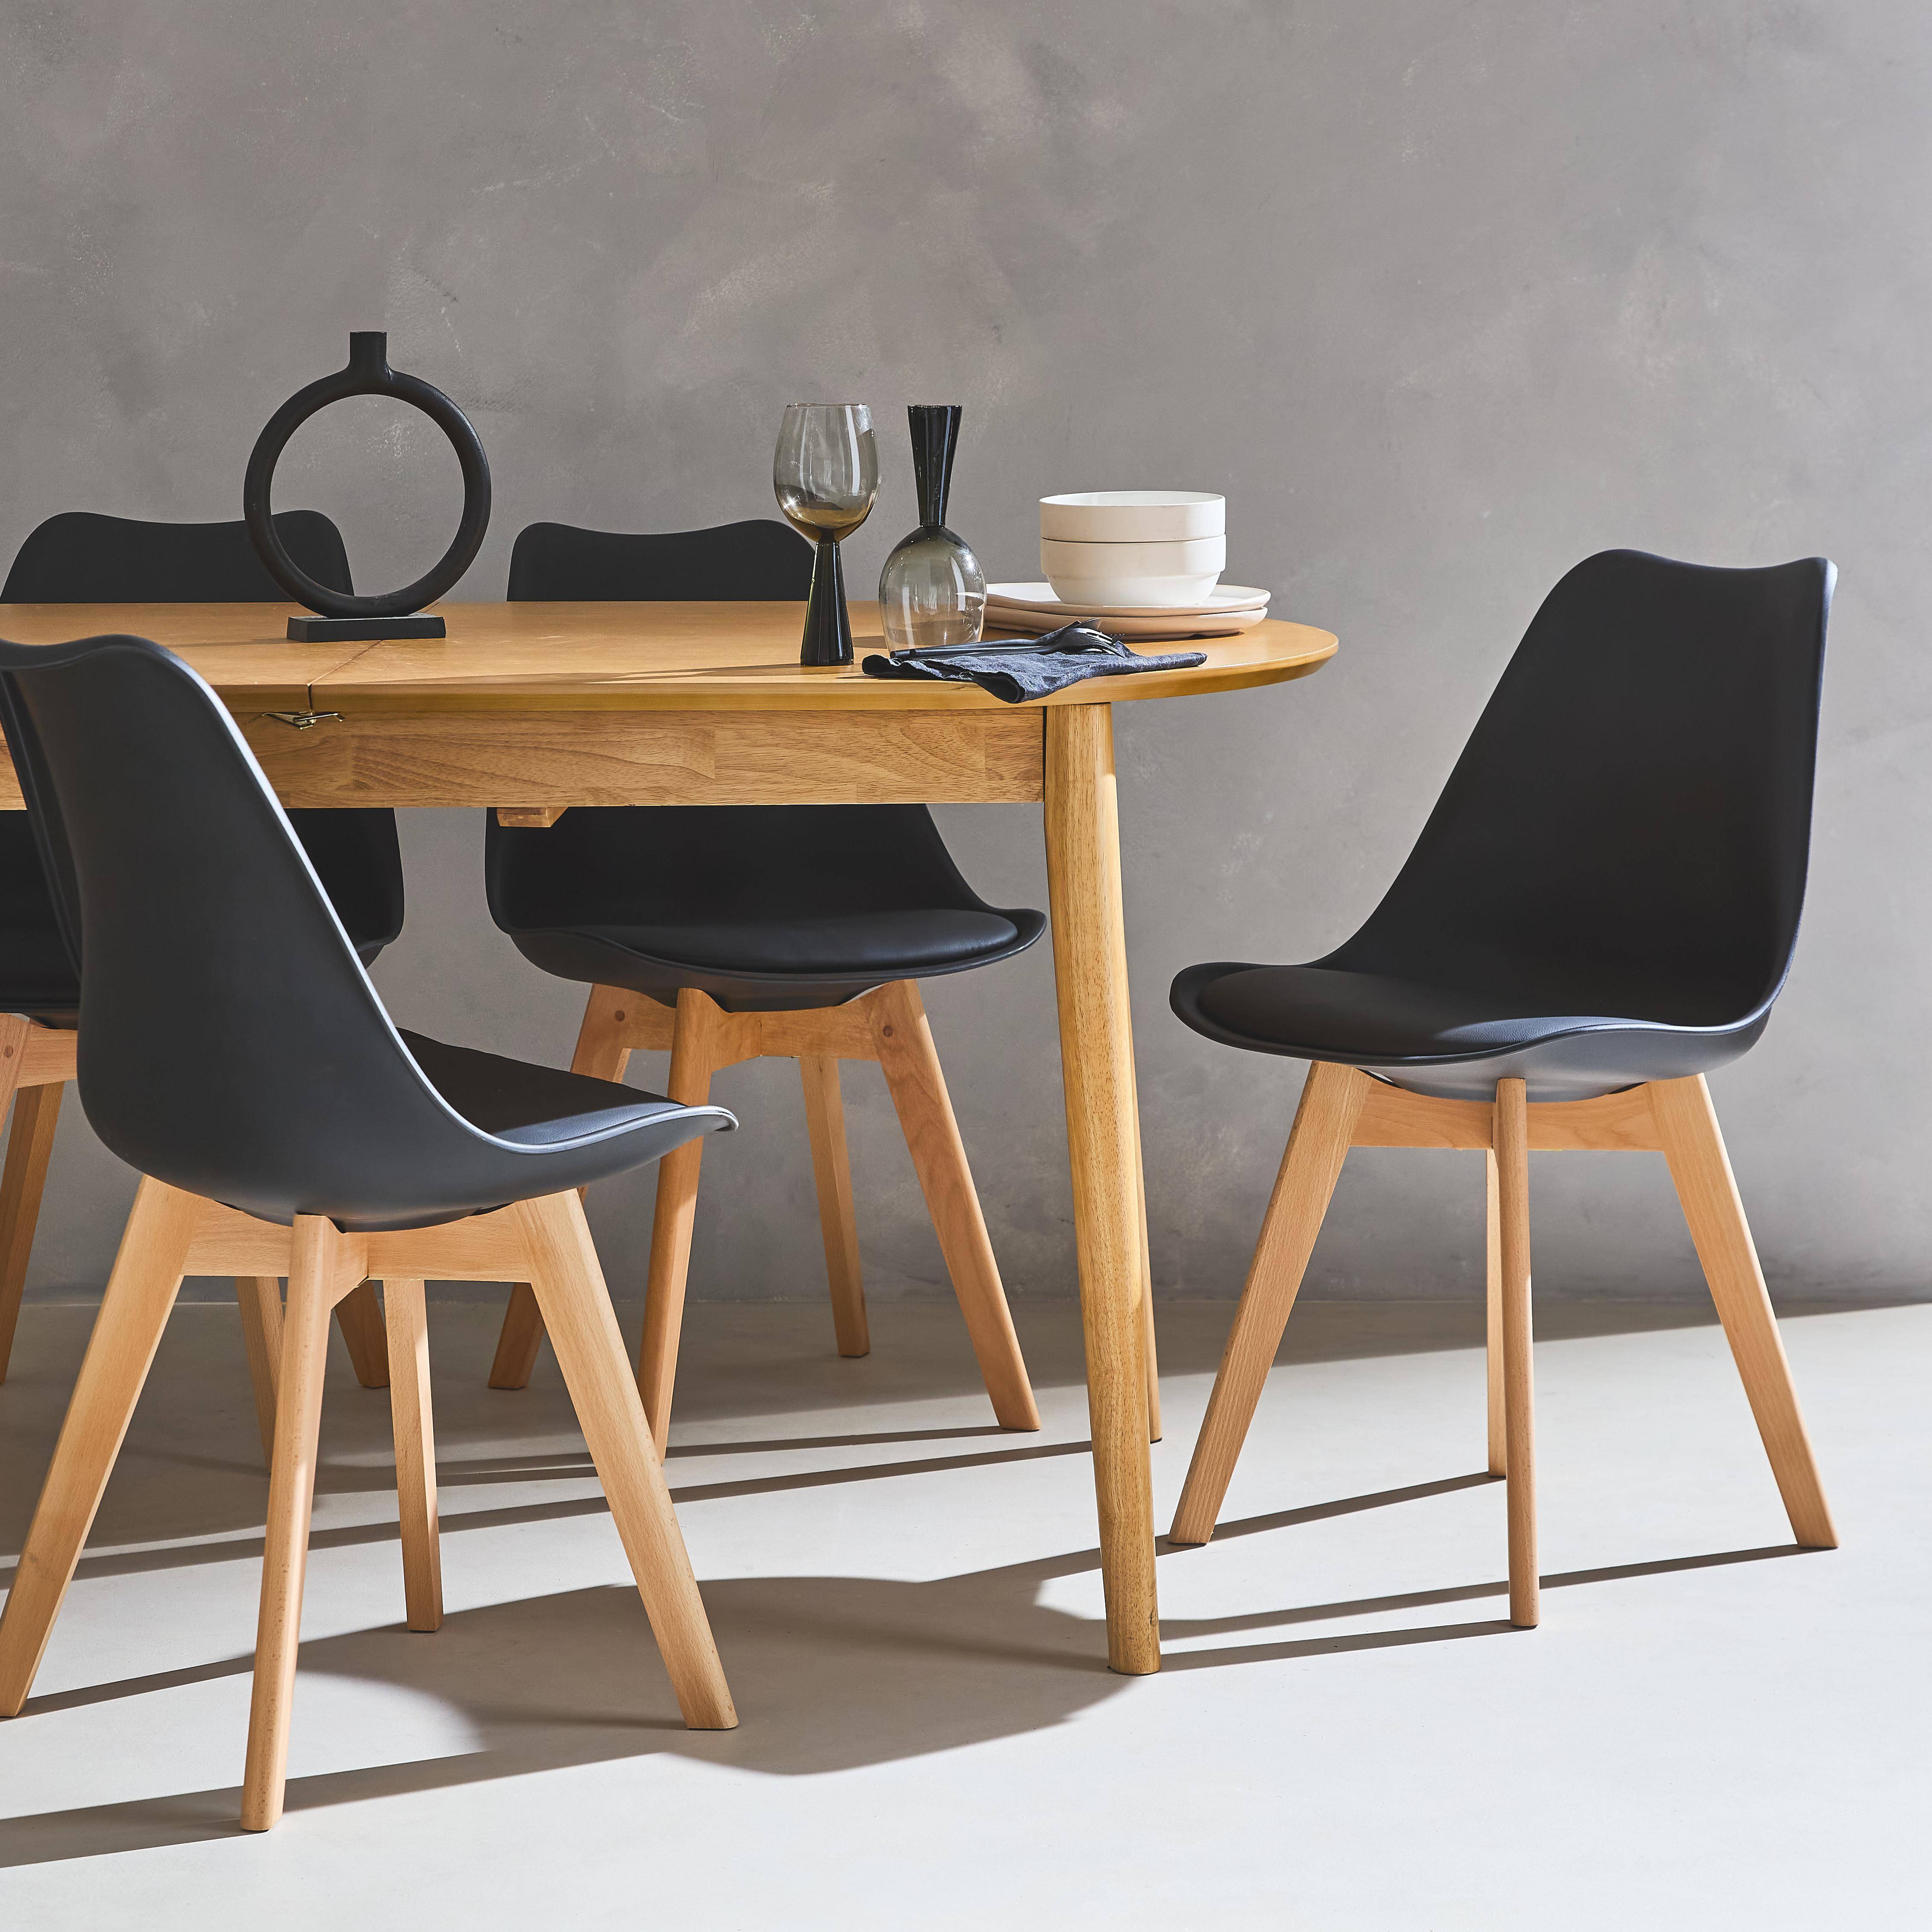 Set of 4 Scandinavian chairs, beechwood legs, 1-seater chair, black,sweeek,Photo1